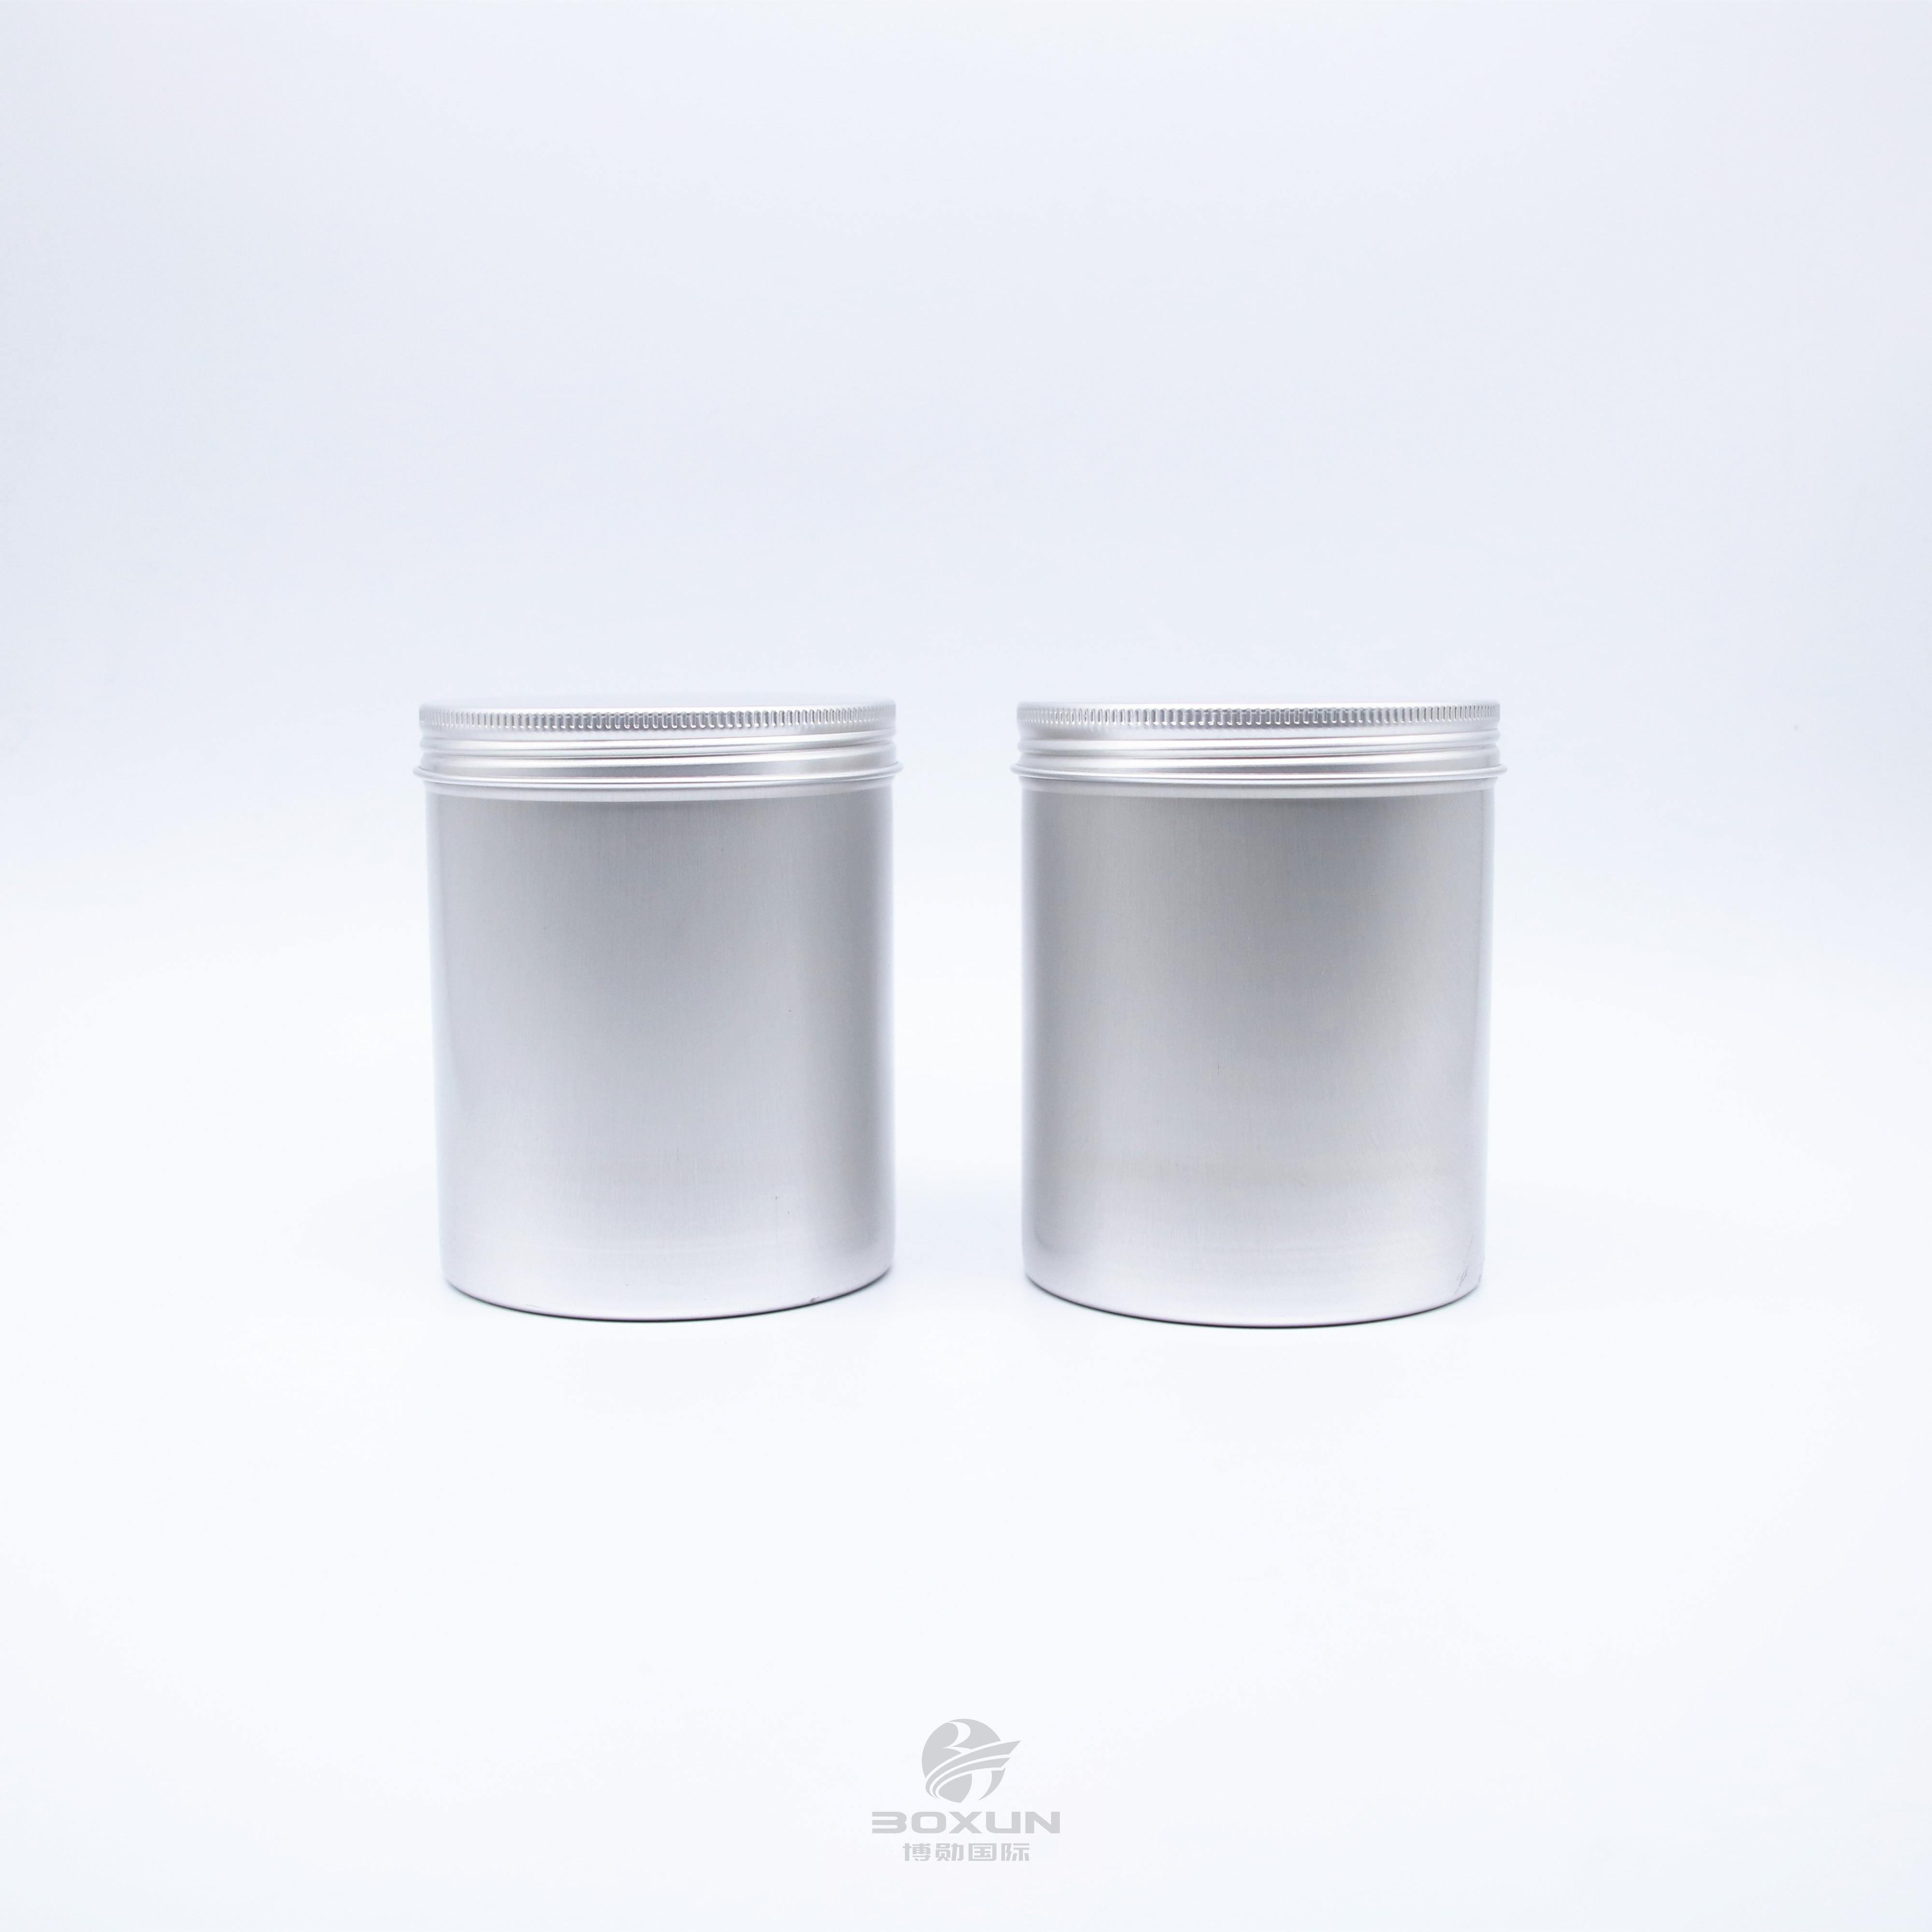  16oz aluminum box 500ml aluminum box face cream jar food box hair wax box can be silk-printed and color-printed 